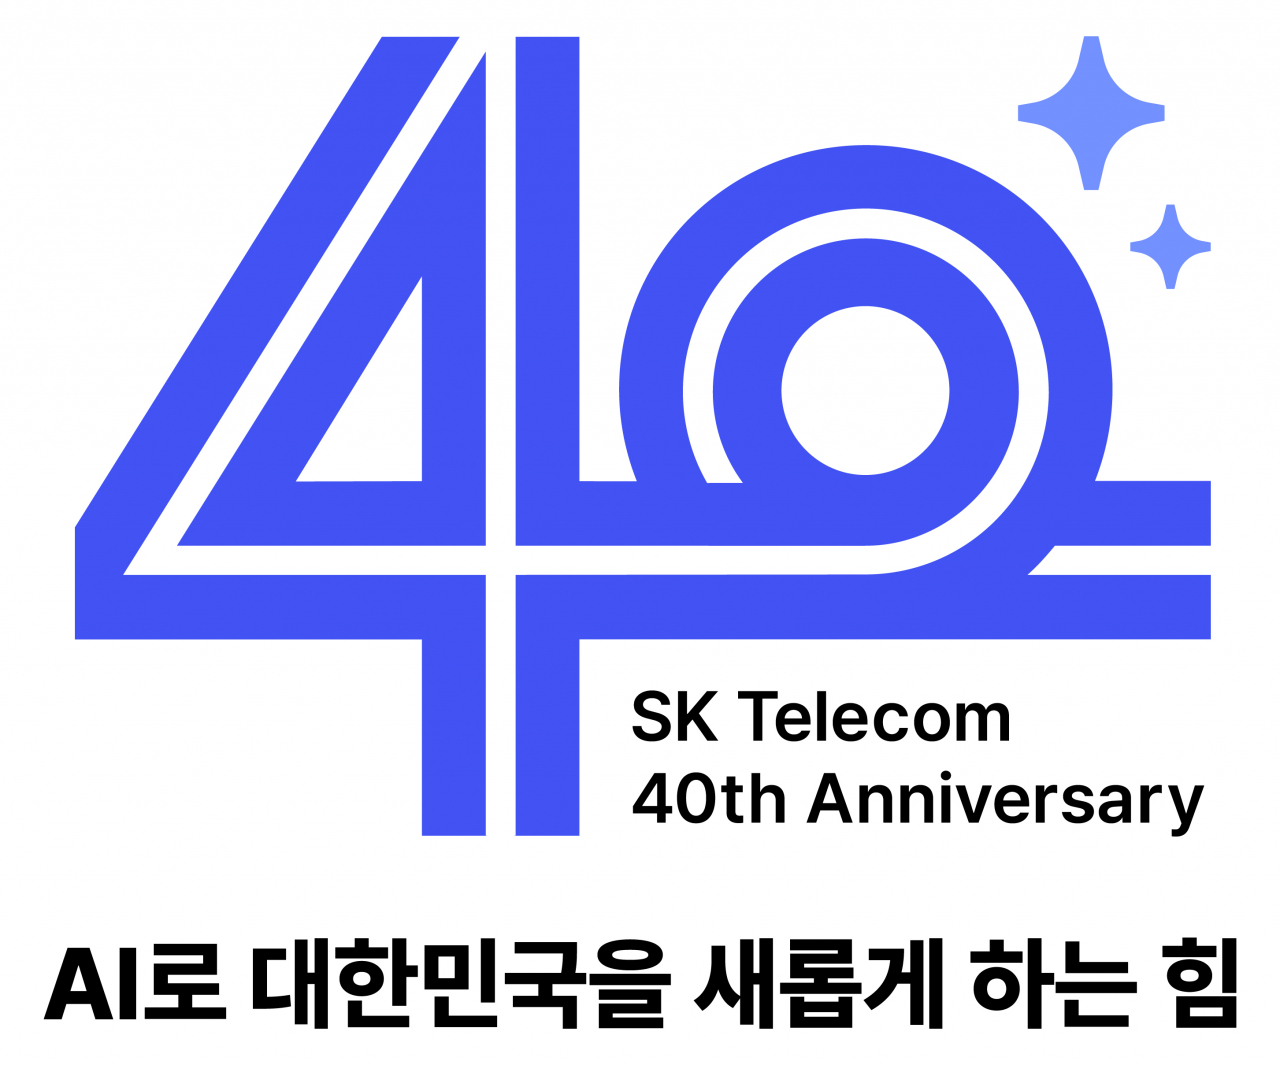 SK Telecom's emblem marks the 40th anniversary of the company's founding. (SK Telecom)